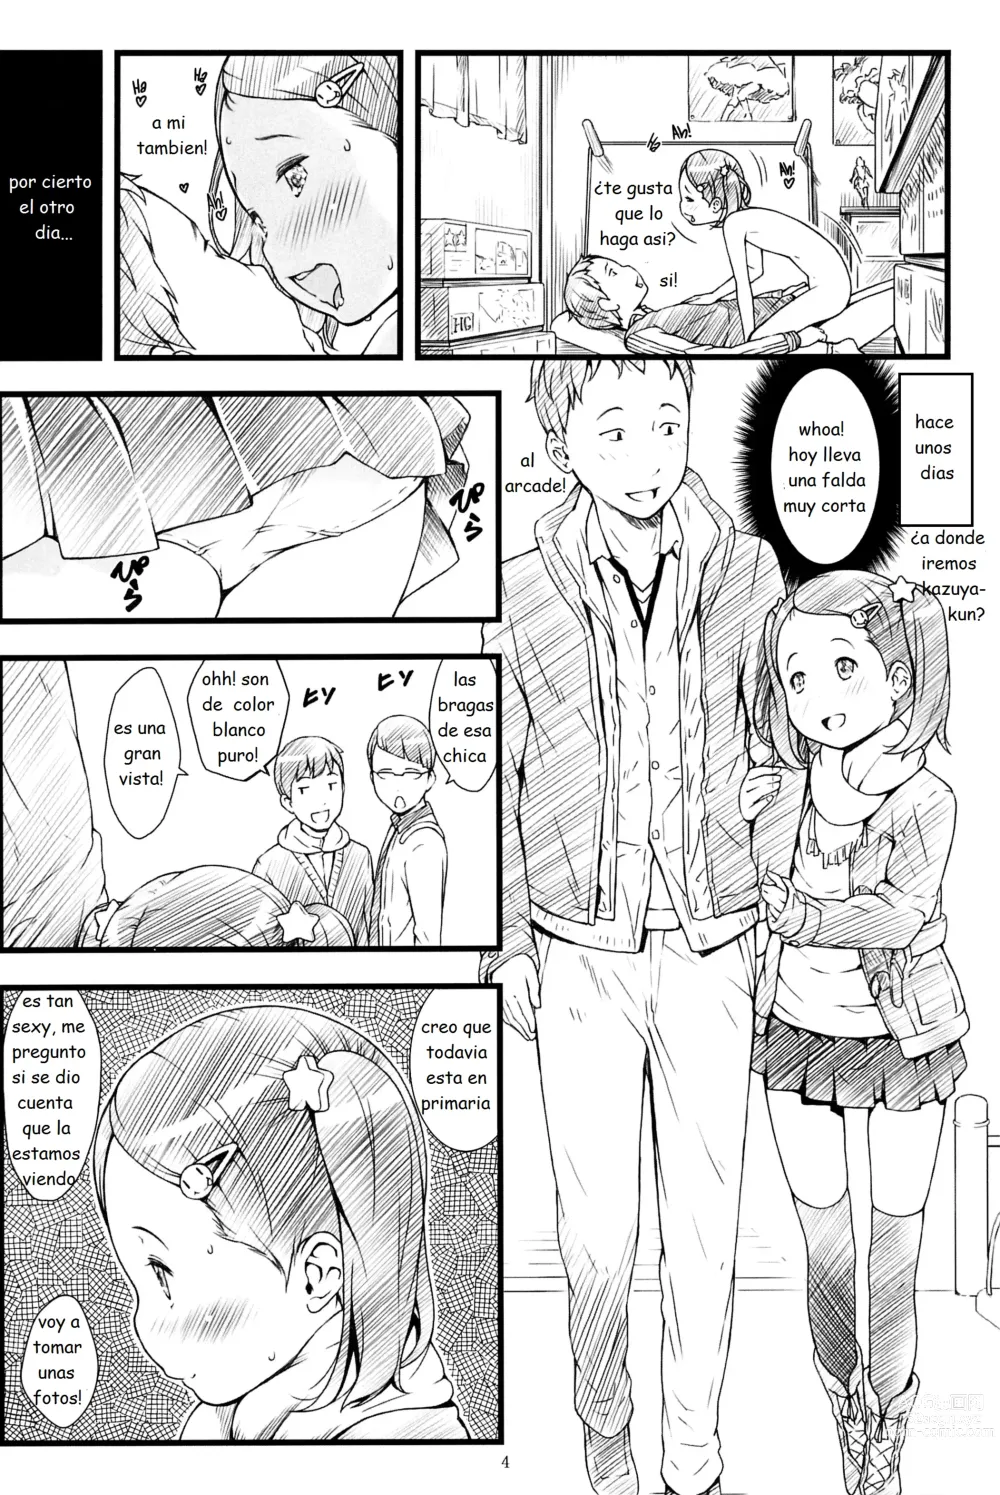 Page 3 of doujinshi focus